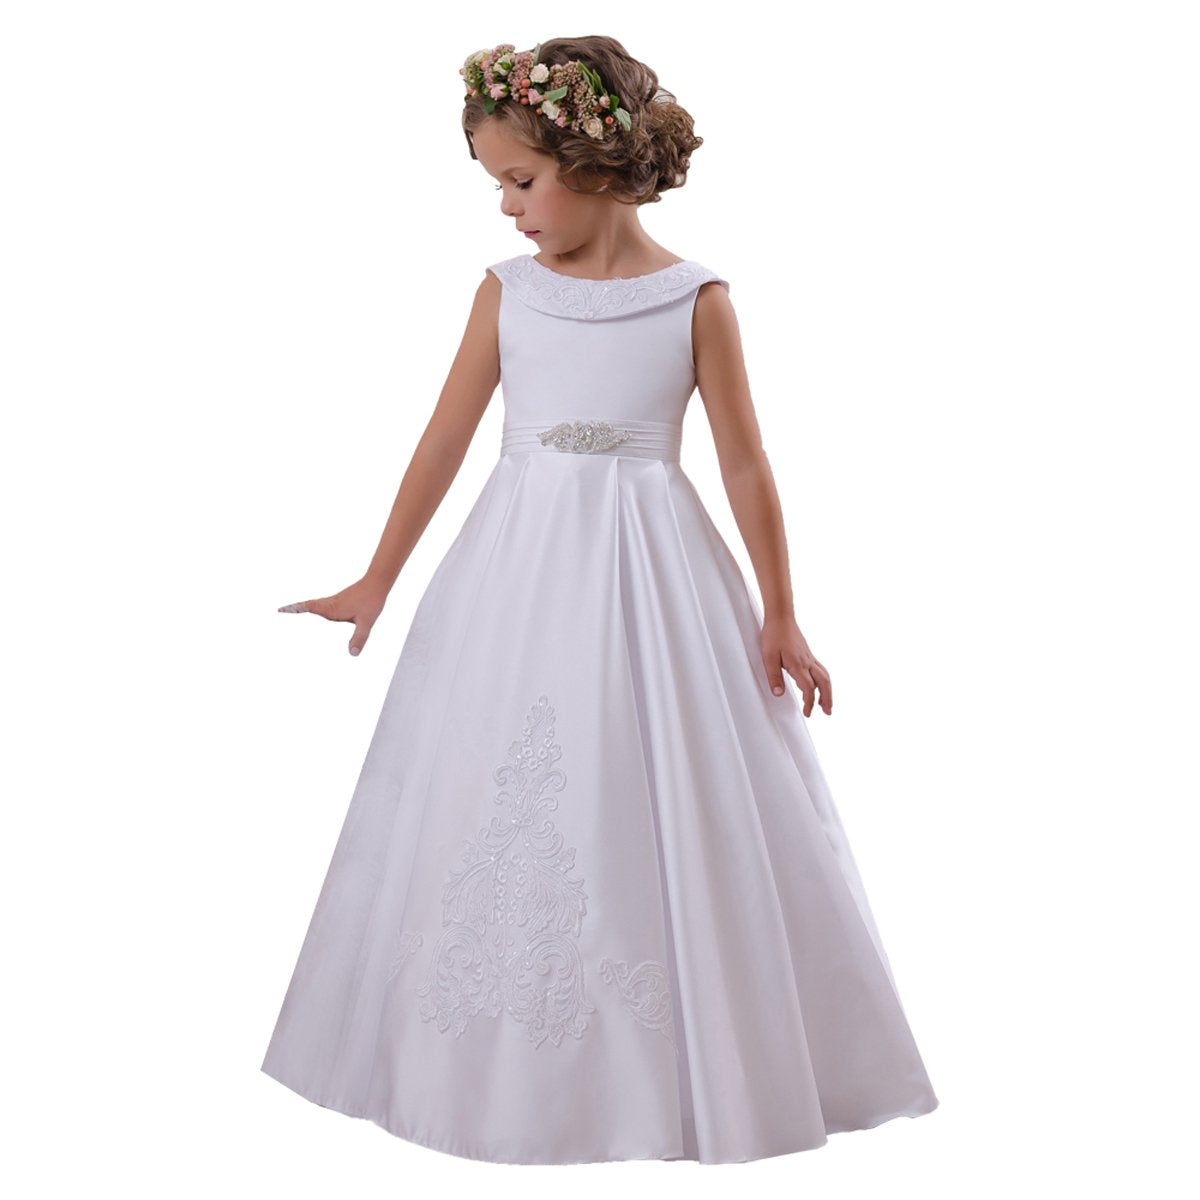 Avadress Little Girls Dresses Elegant O-Neck Sleeveless Kids Ball Gown A-Line Stain Party Wedding Dresses for Girls 2-12 Year Old 2 / White